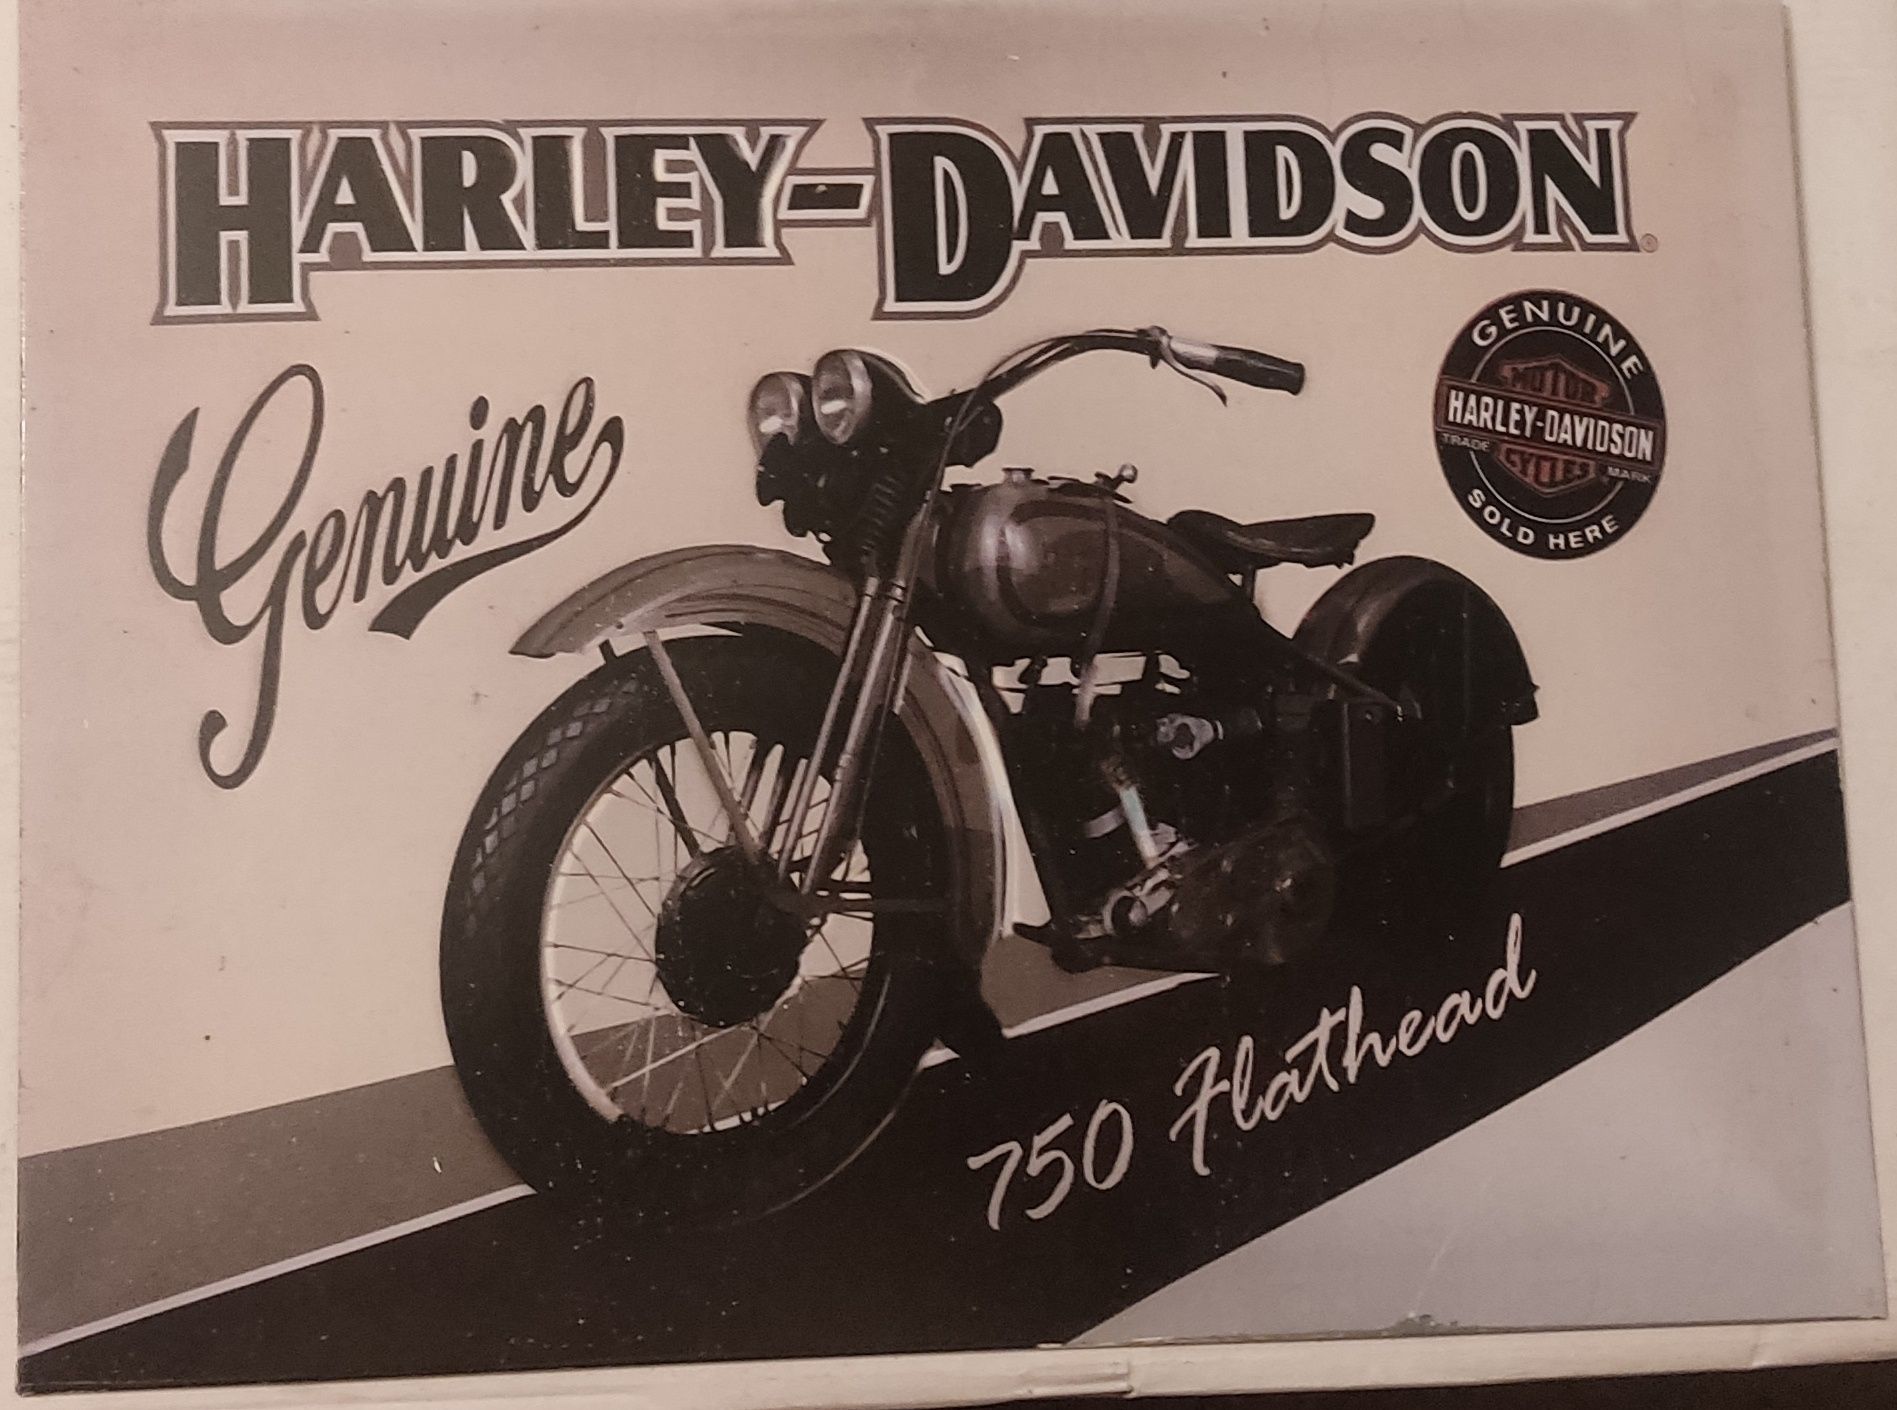 Szyld tablica Harley Davidson